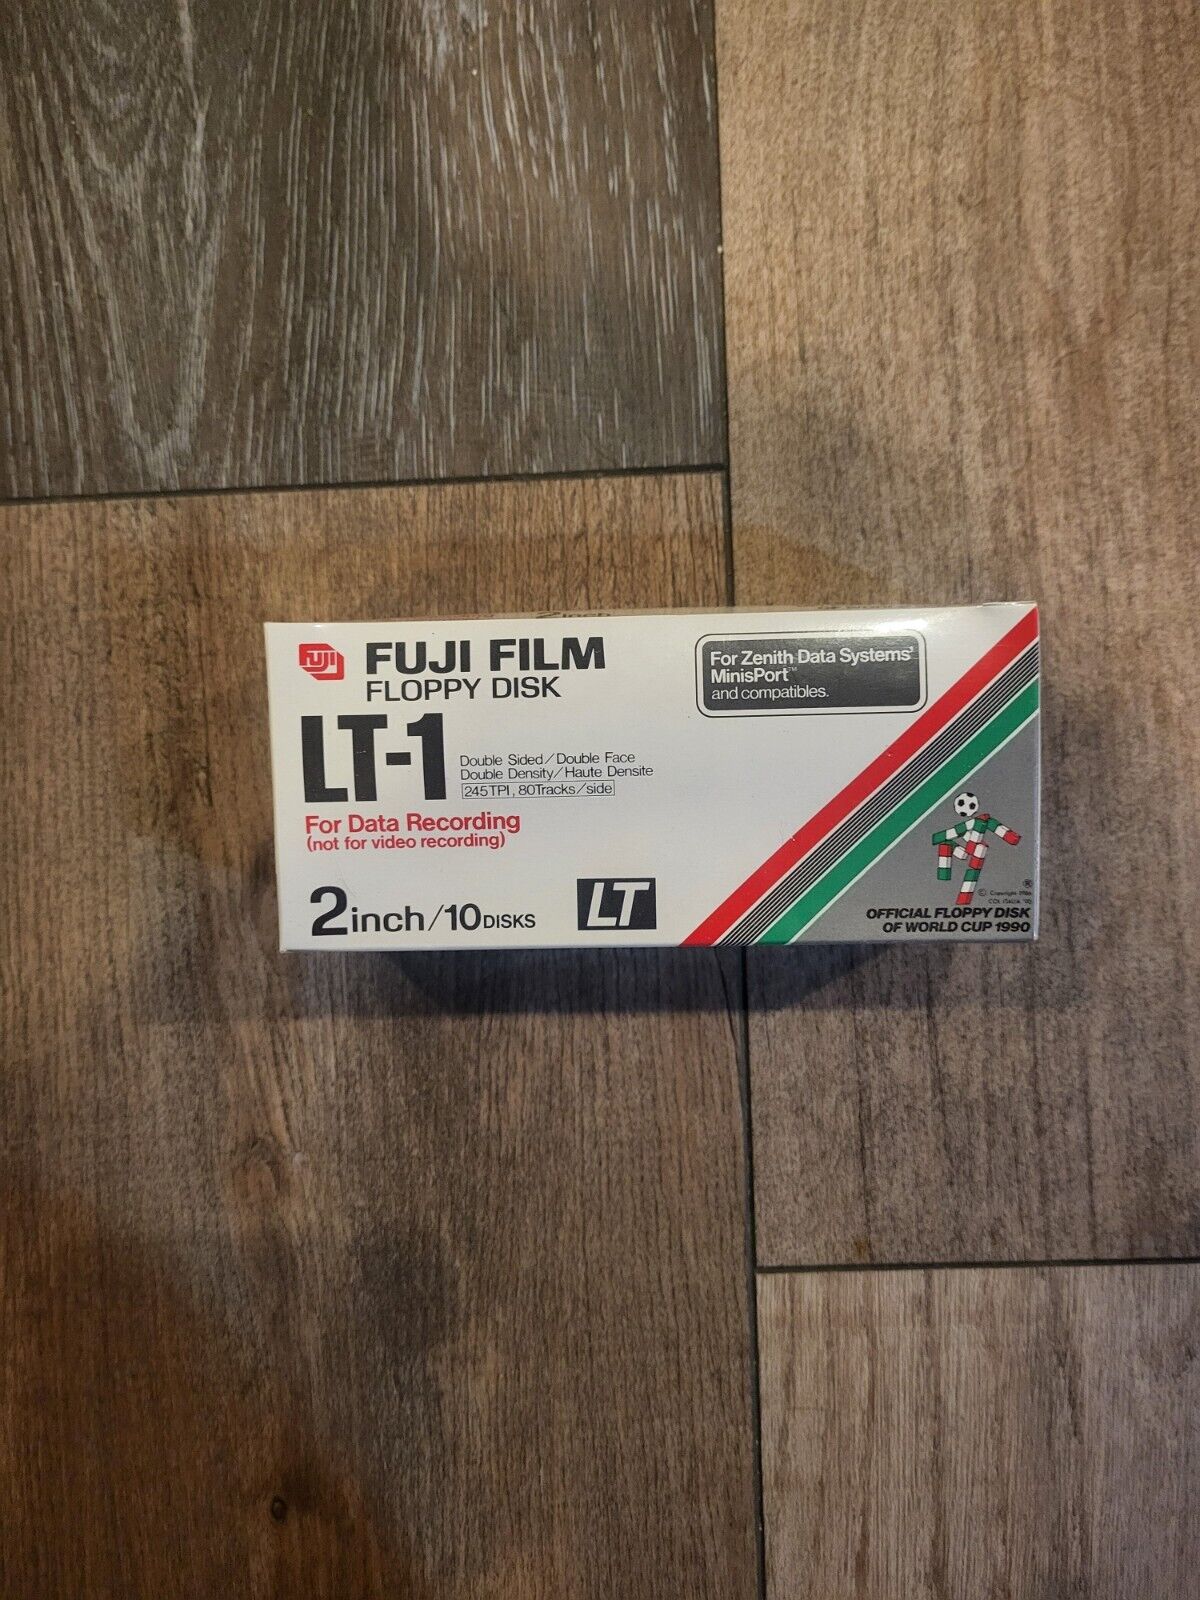 2 Inch Floppy Disk FUJI FILM LT-1 Qty 10 Zenith Minisport Rare Sealed 